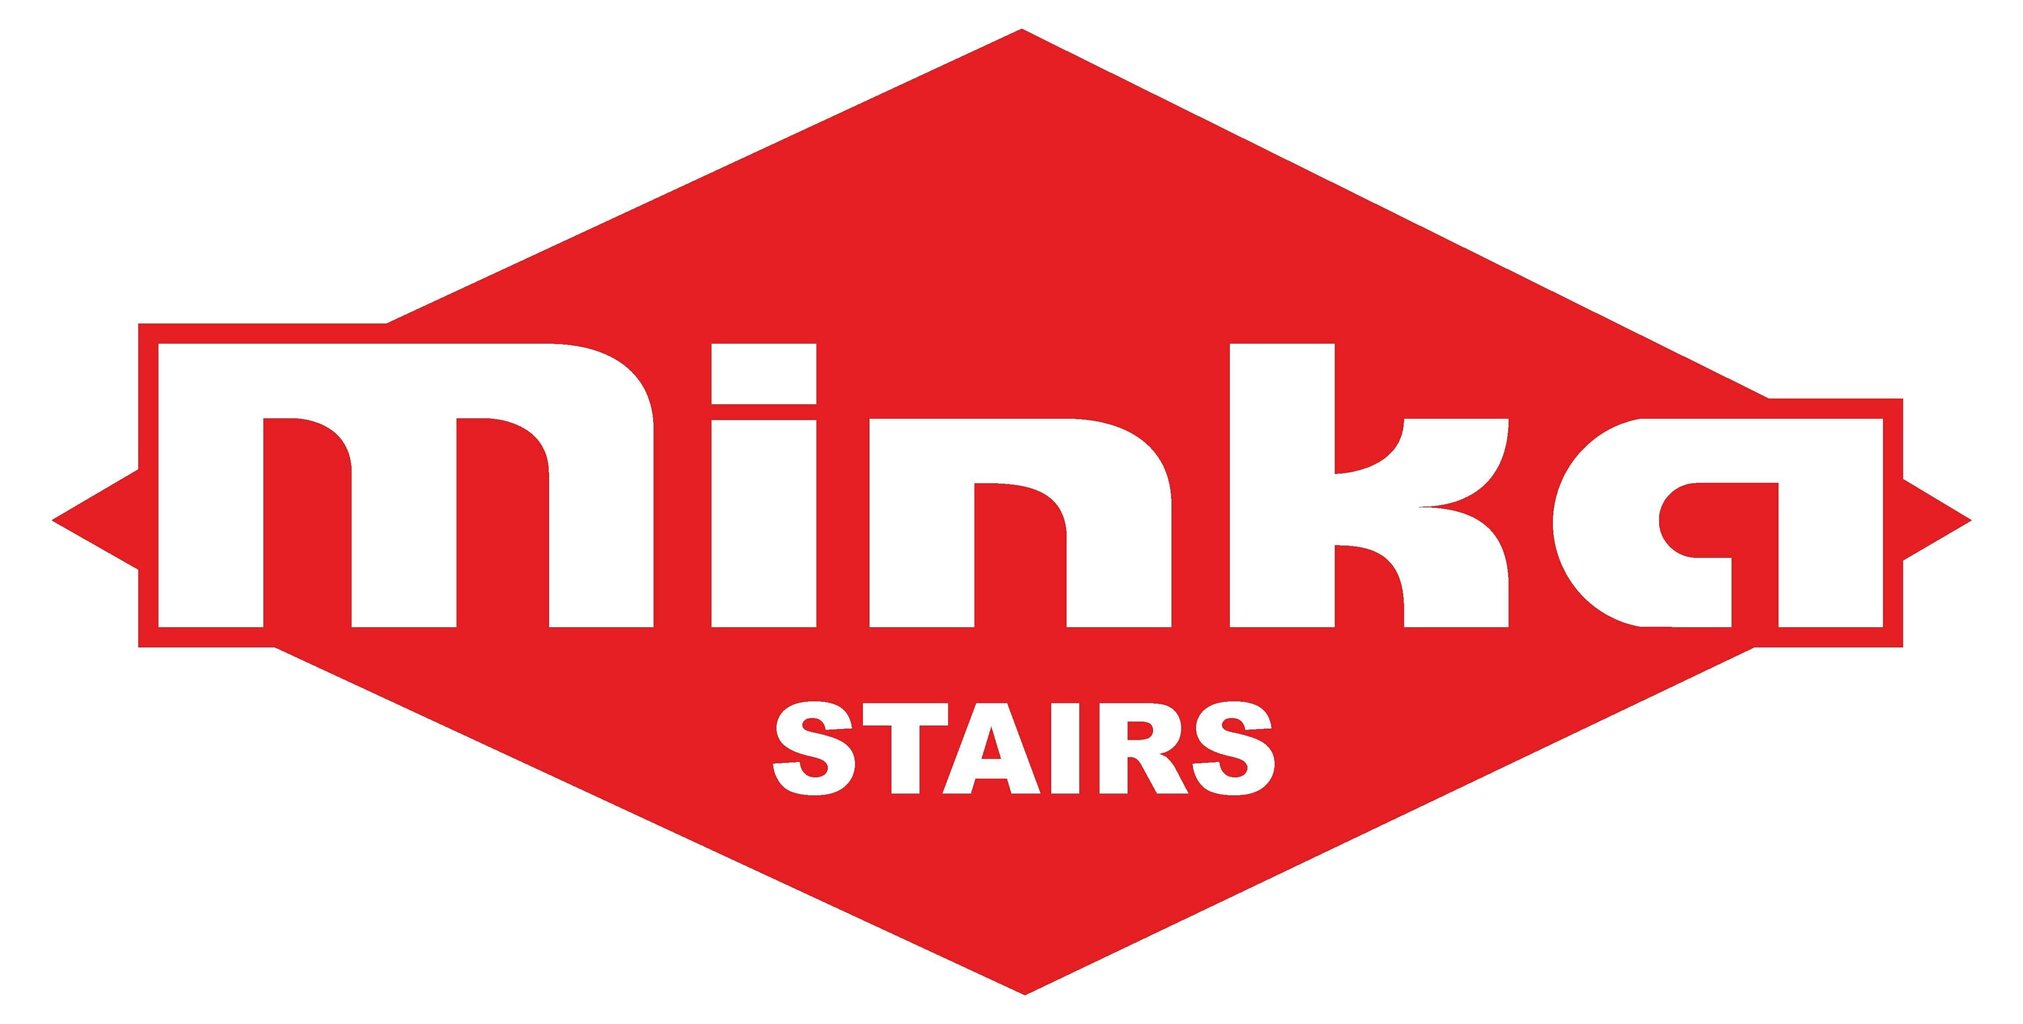 Kāpnes Minka STRONG 12, Augstums 290 - 307 cm цена и информация | Kāpnes | 220.lv